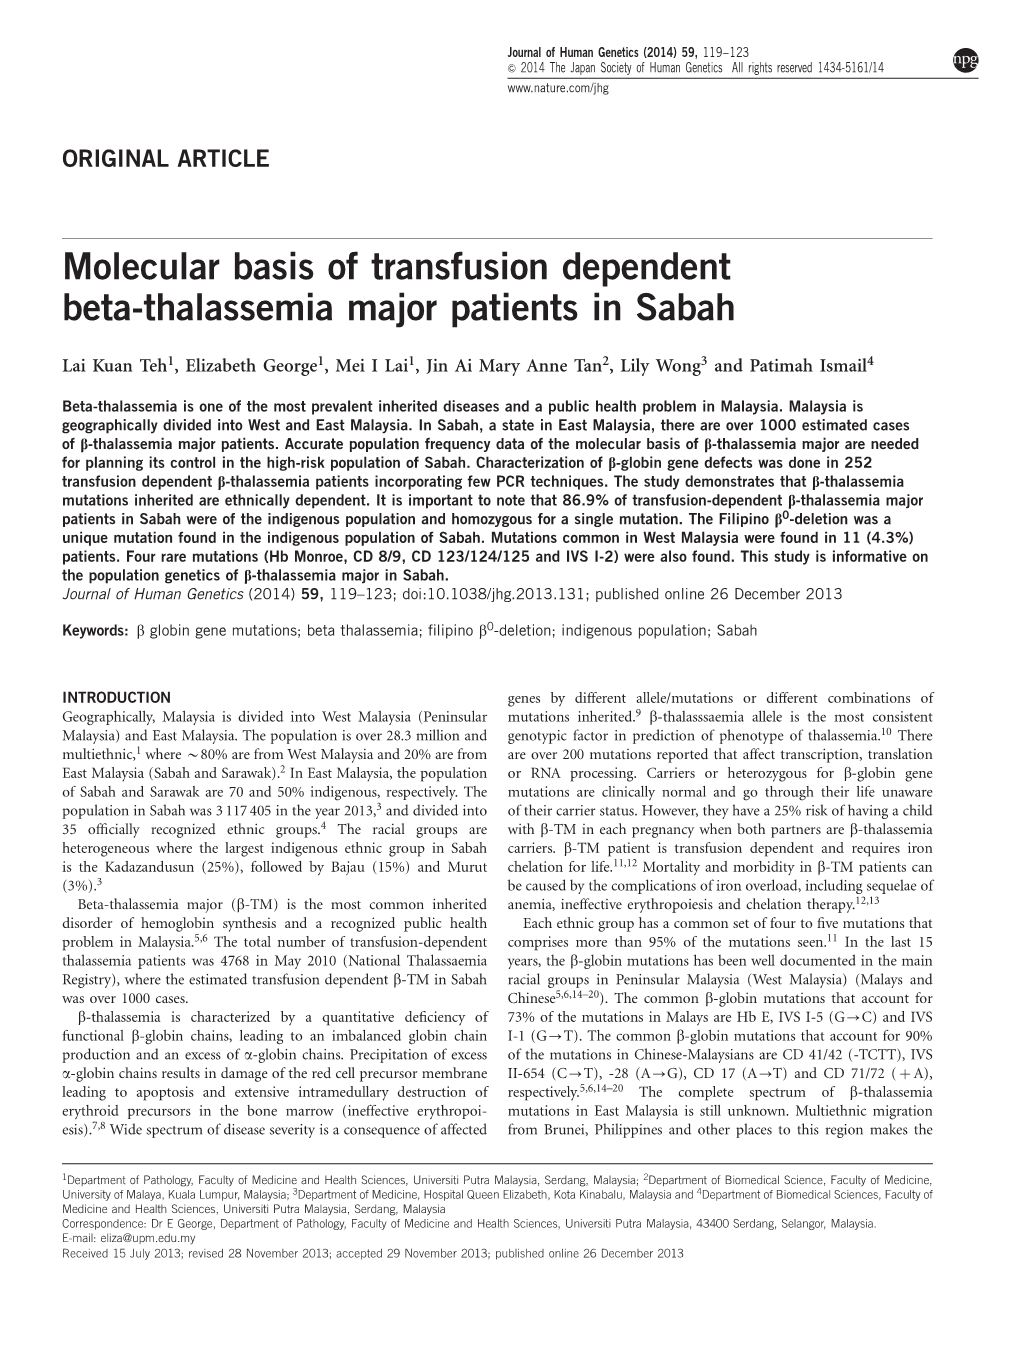 Molecular Basis of Transfusion Dependent Beta-Thalassemia Major Patients in Sabah